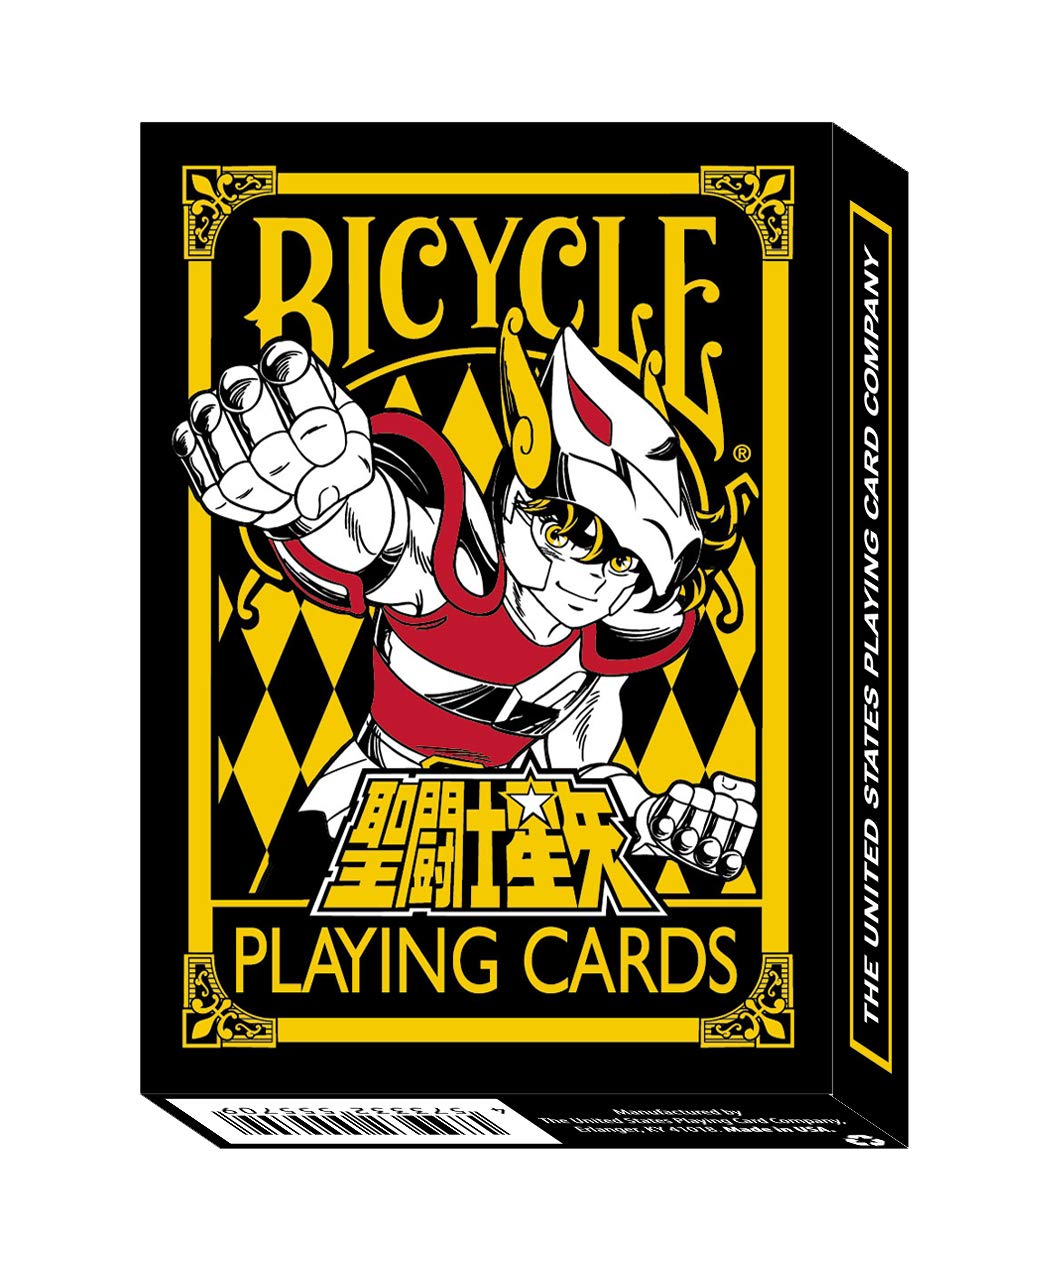 Saint Seiya BICYCLE playing cards